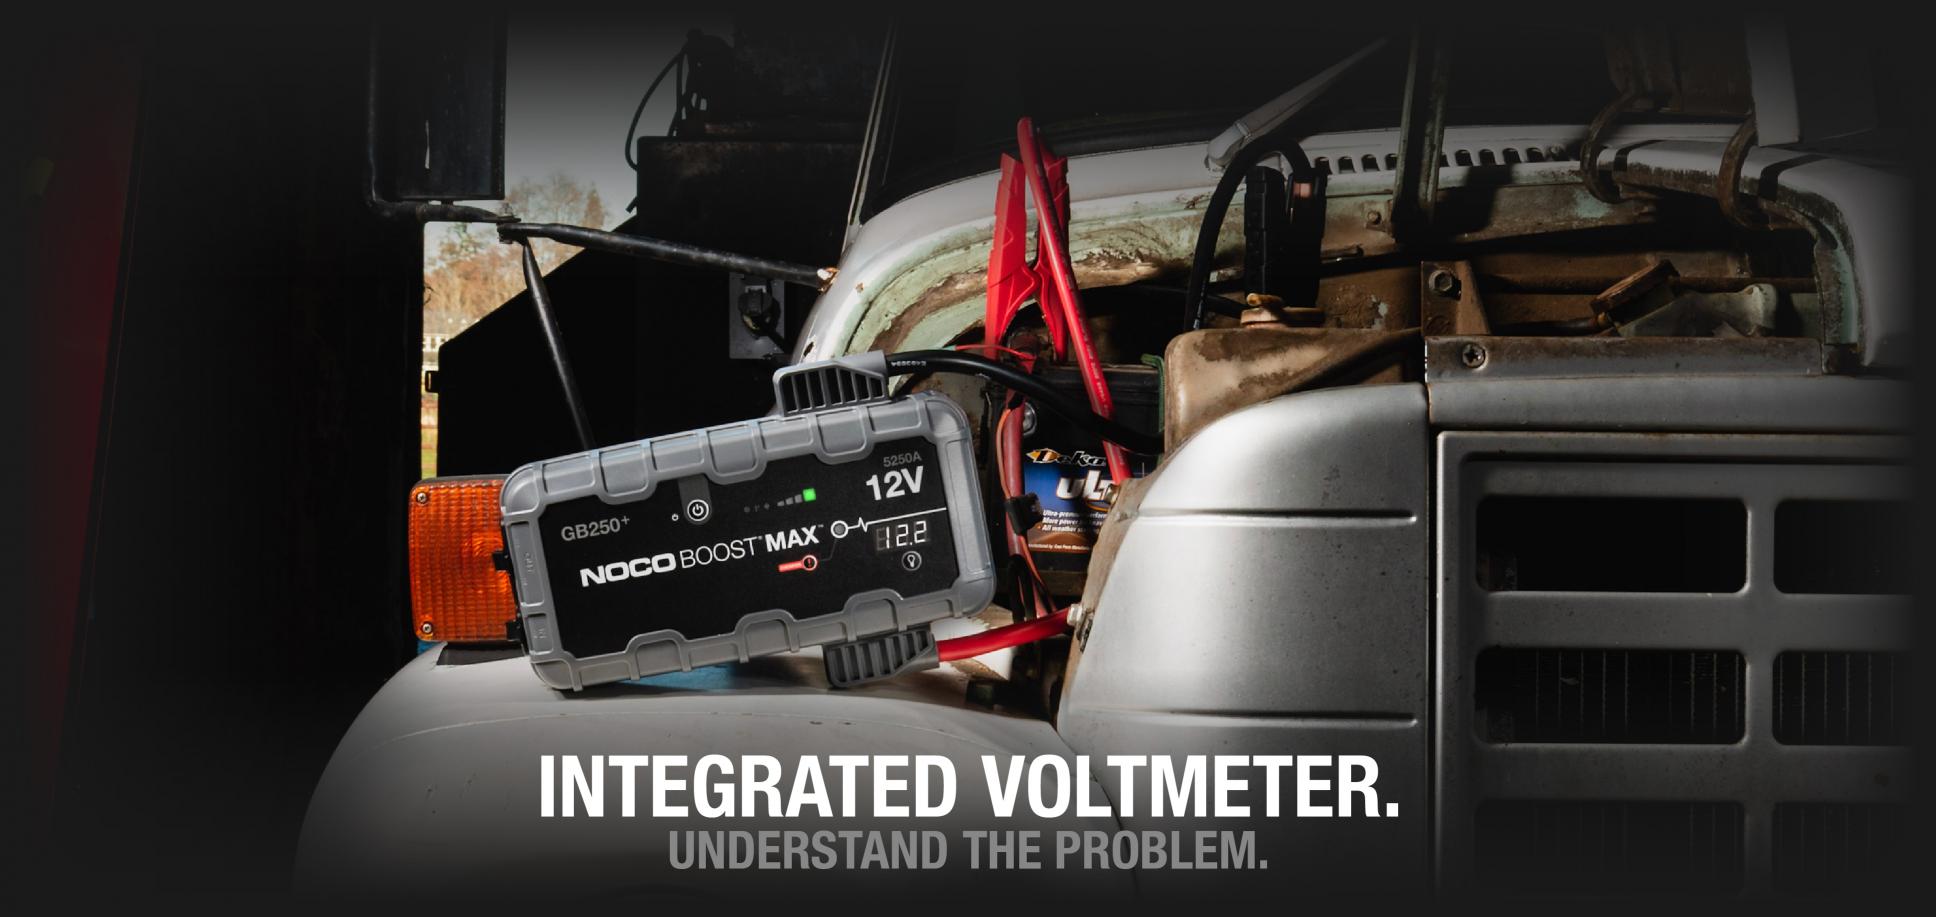 Lithium jump starter Noco GB250. Integrated voltmeter. Understand the problem